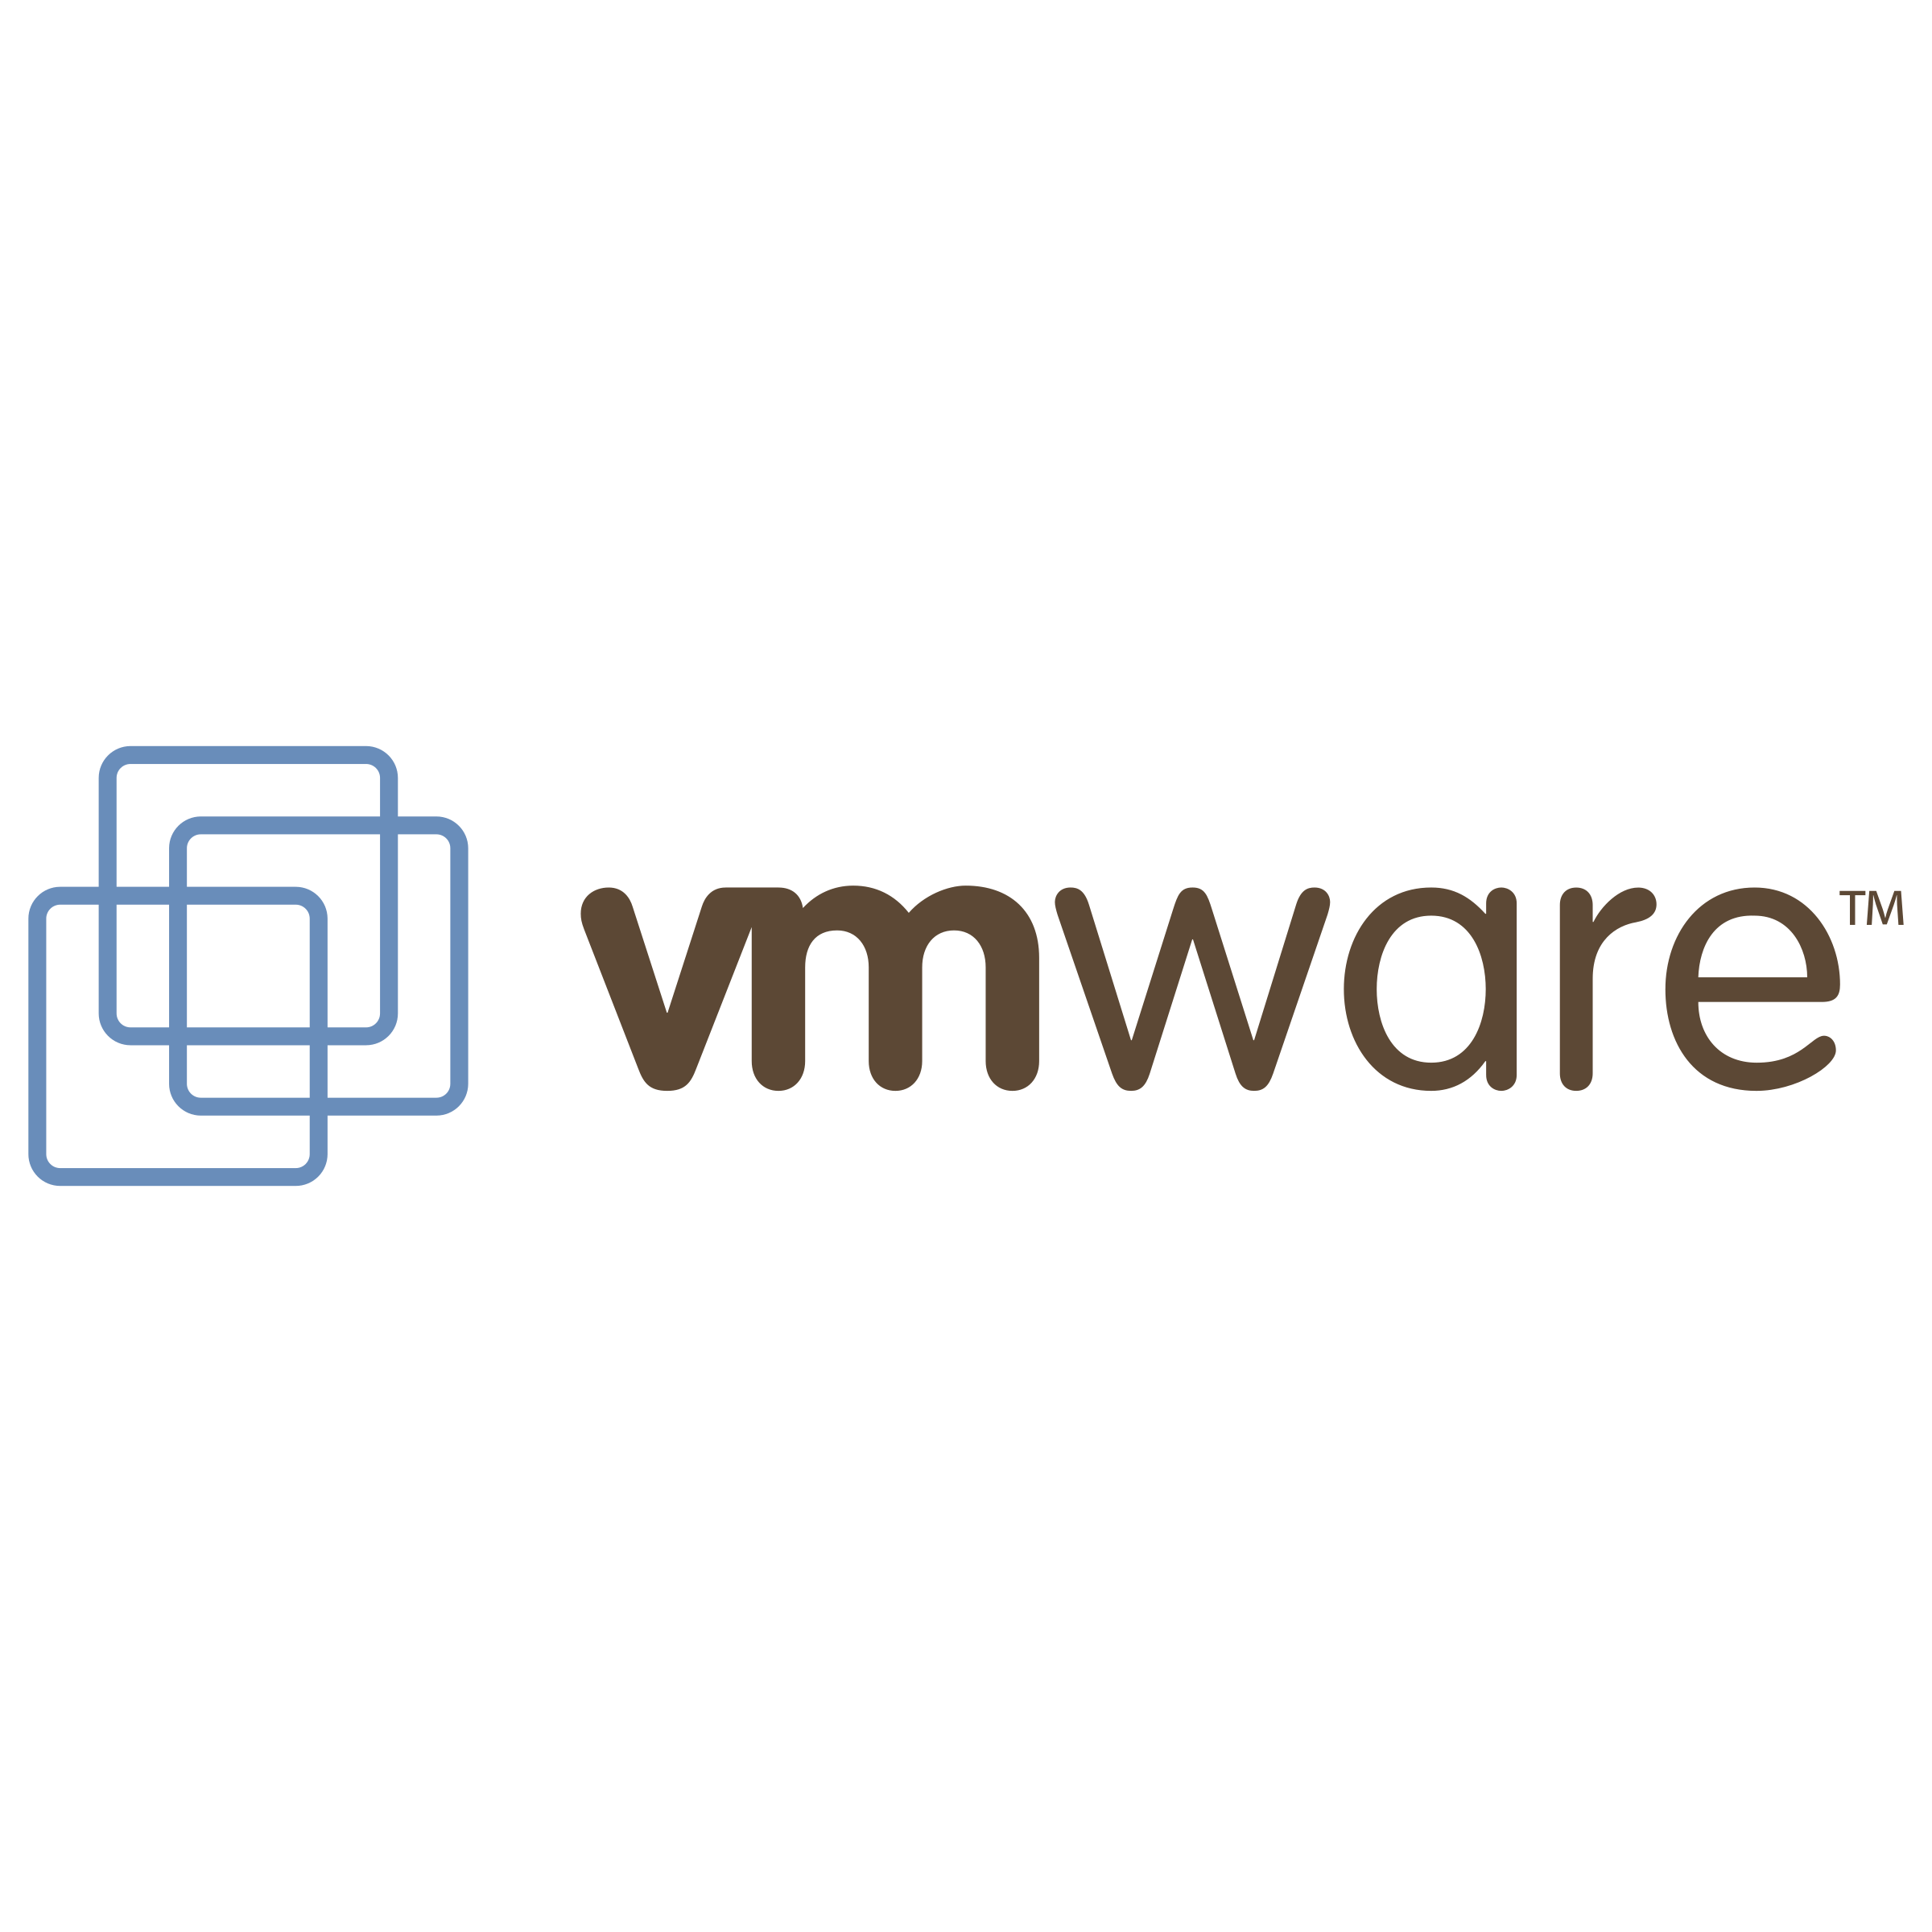 Vmare Logo - VMware Logo PNG Transparent & SVG Vector - Freebie Supply